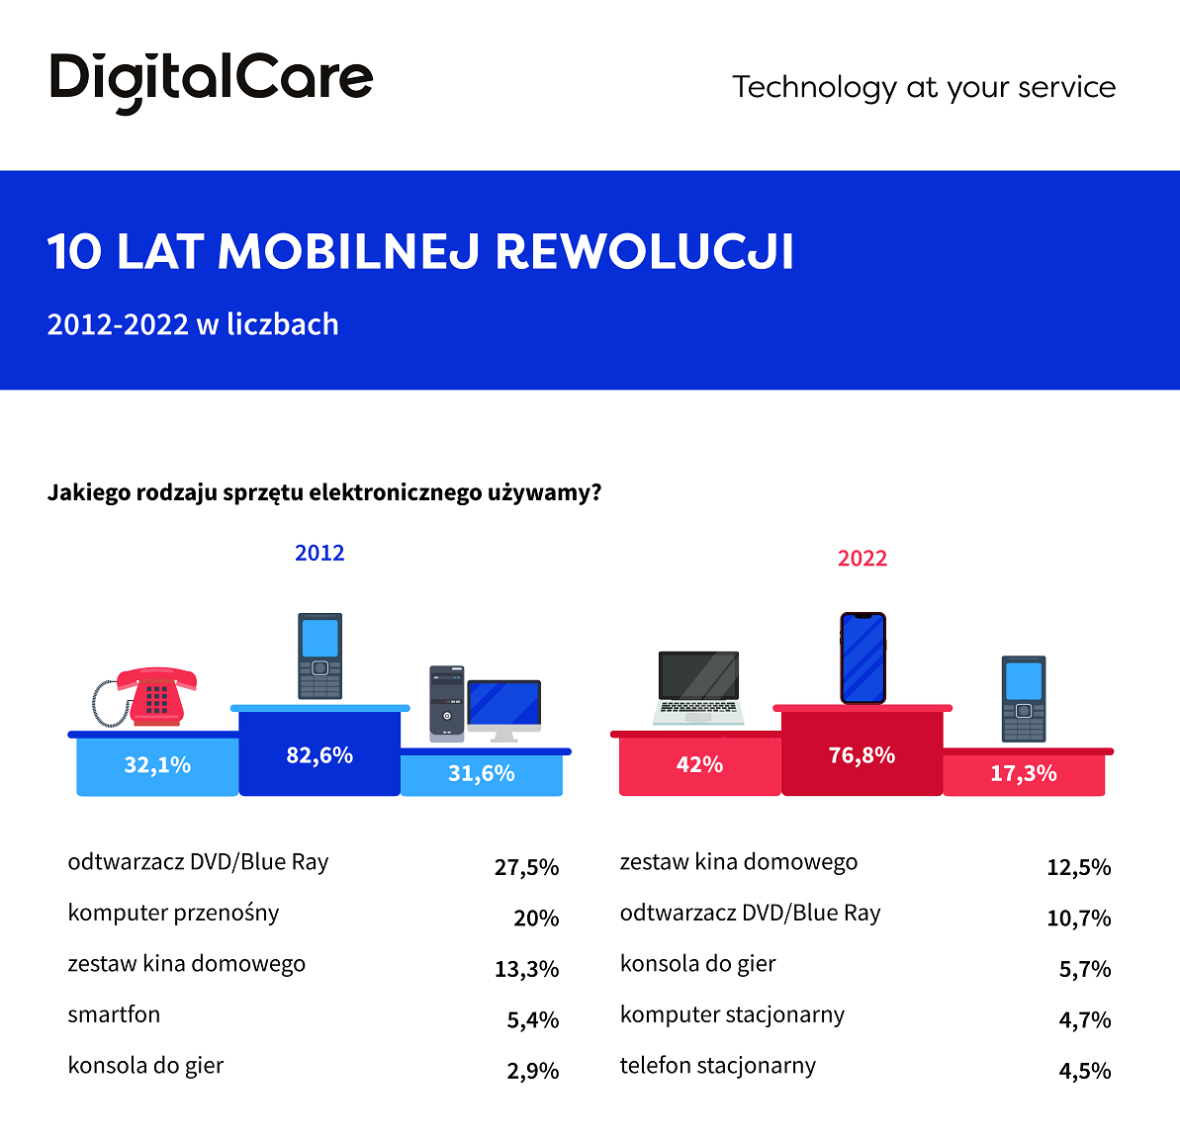 Raport Digital Care "10 lat mobilnej rewolucji"